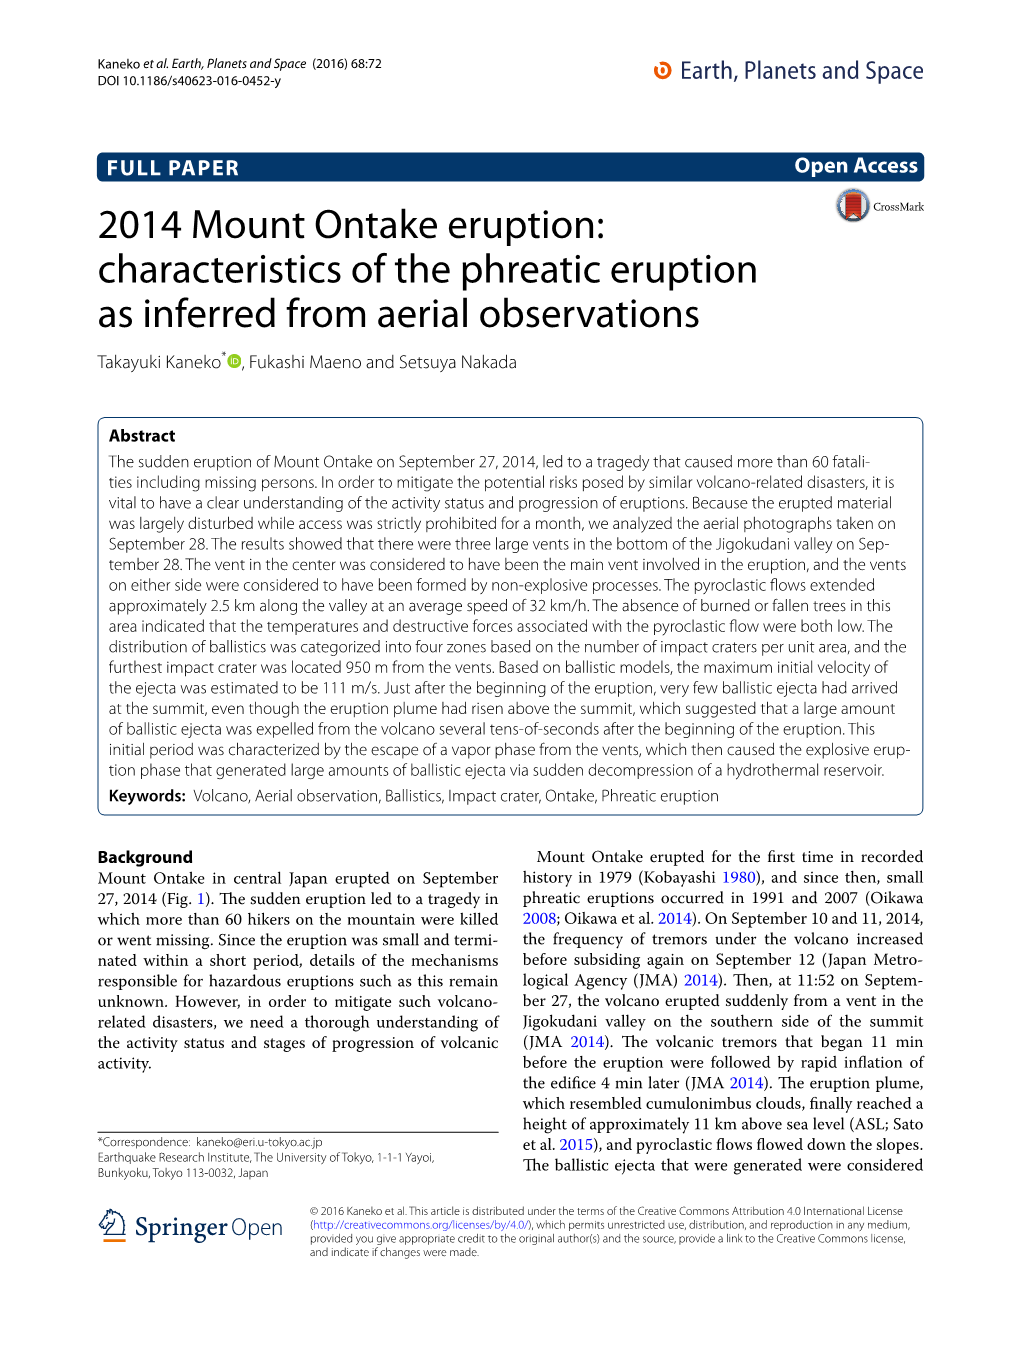 2014 Mount Ontake Eruption: Characteristics of the Phreatic Eruption As Inferred from Aerial Observations Takayuki Kaneko* , Fukashi Maeno and Setsuya Nakada